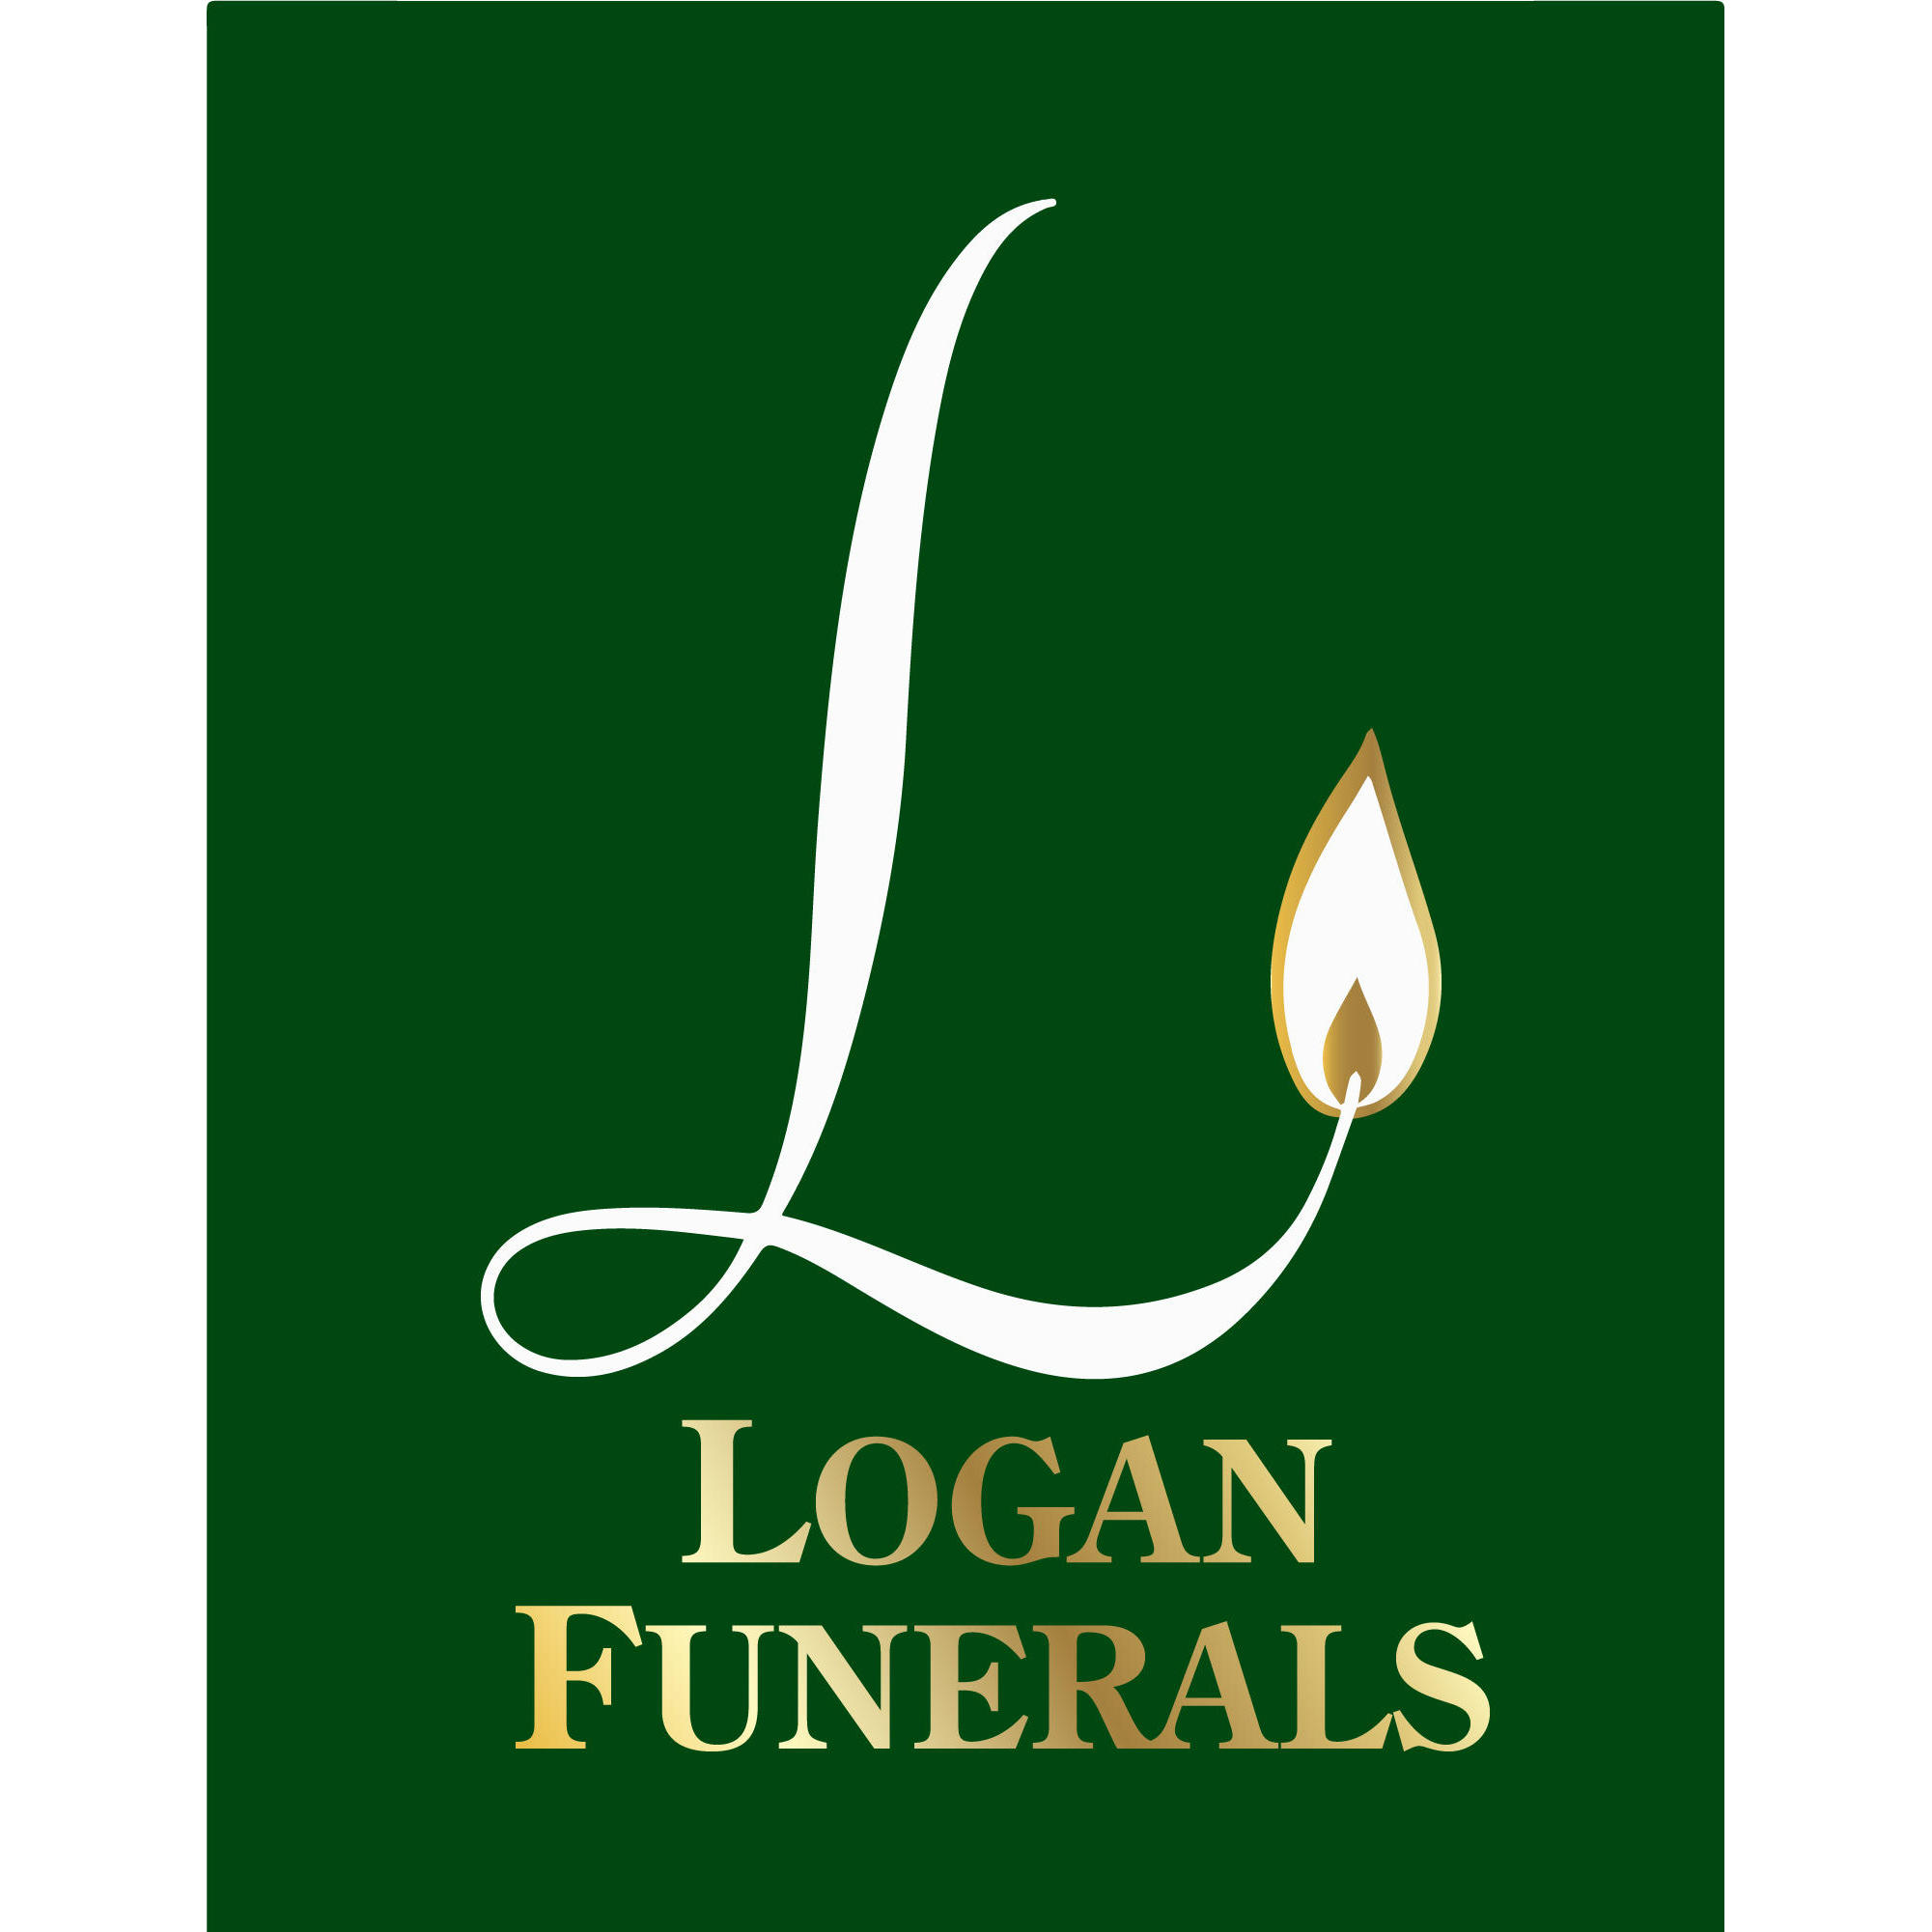 Logan Funerals - Goondiwindi, QLD 4390 - (07) 4671 1378 | ShowMeLocal.com